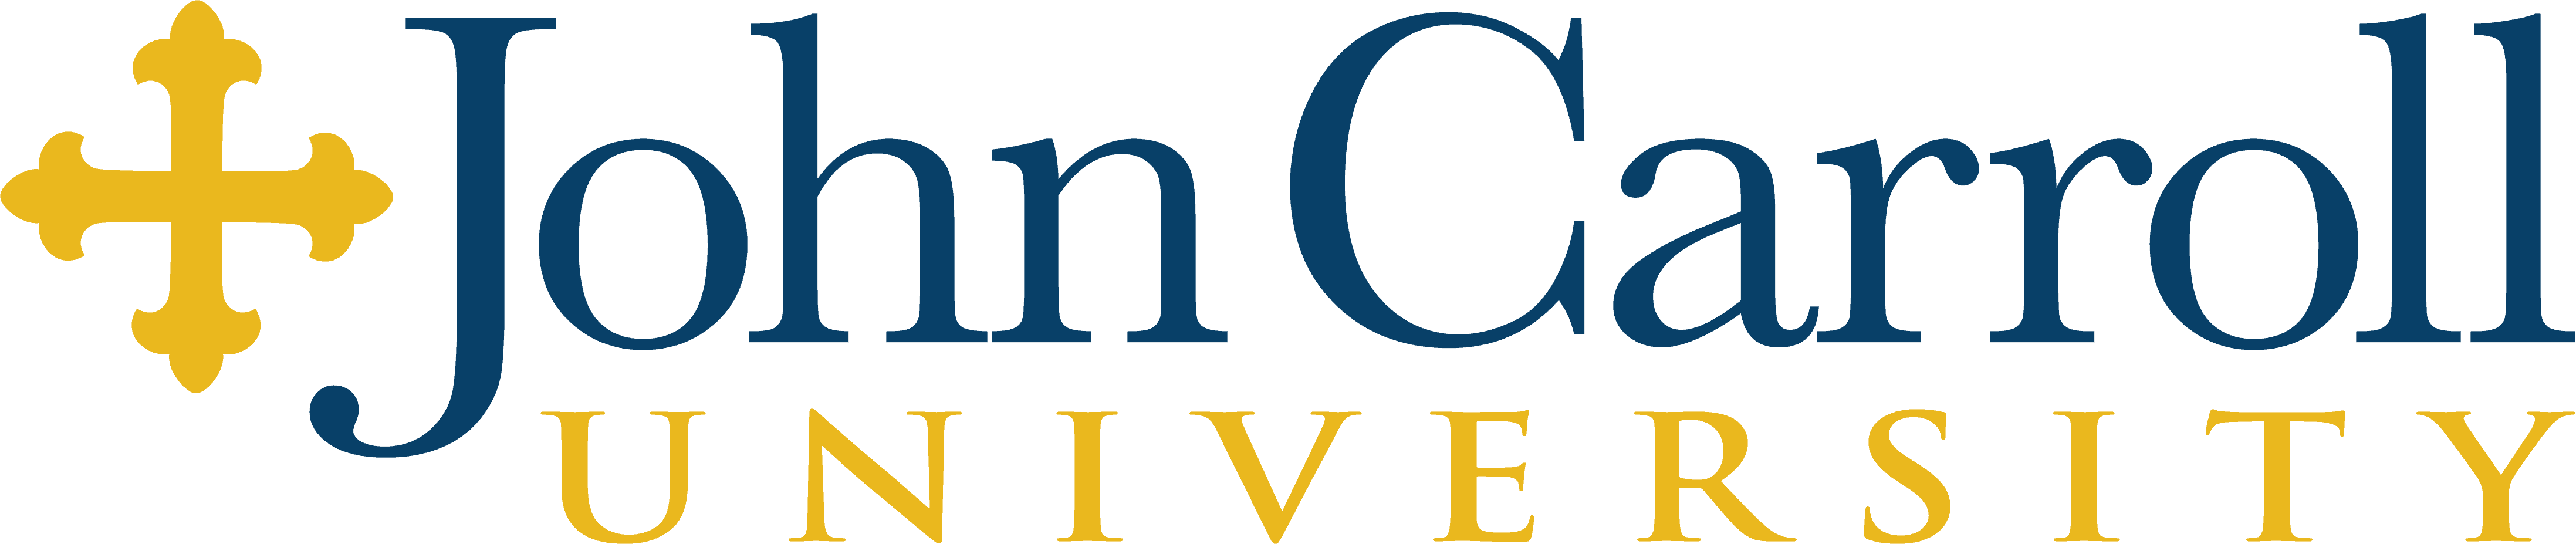 john carroll university logo